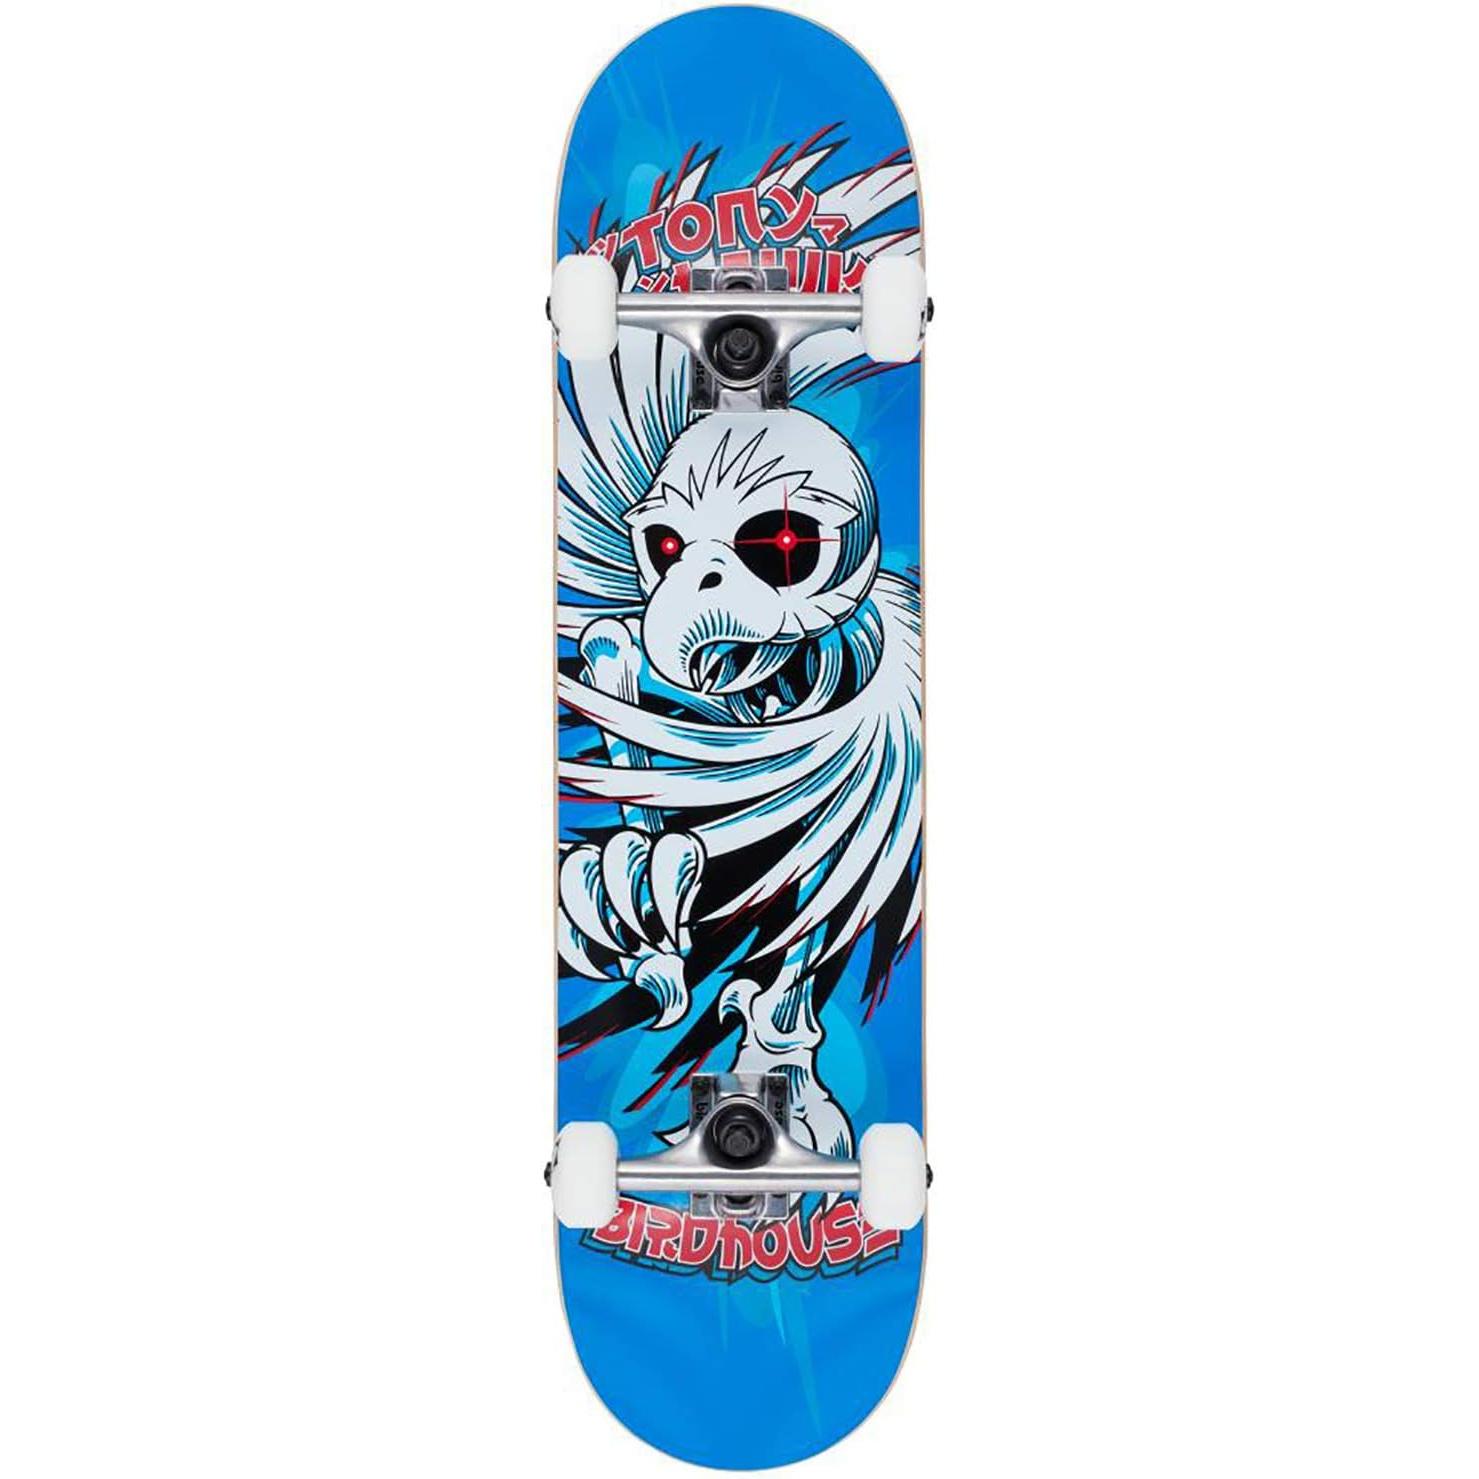 Birdhouse Tony Hawk Spiral Blue Skateboard complet 7 75